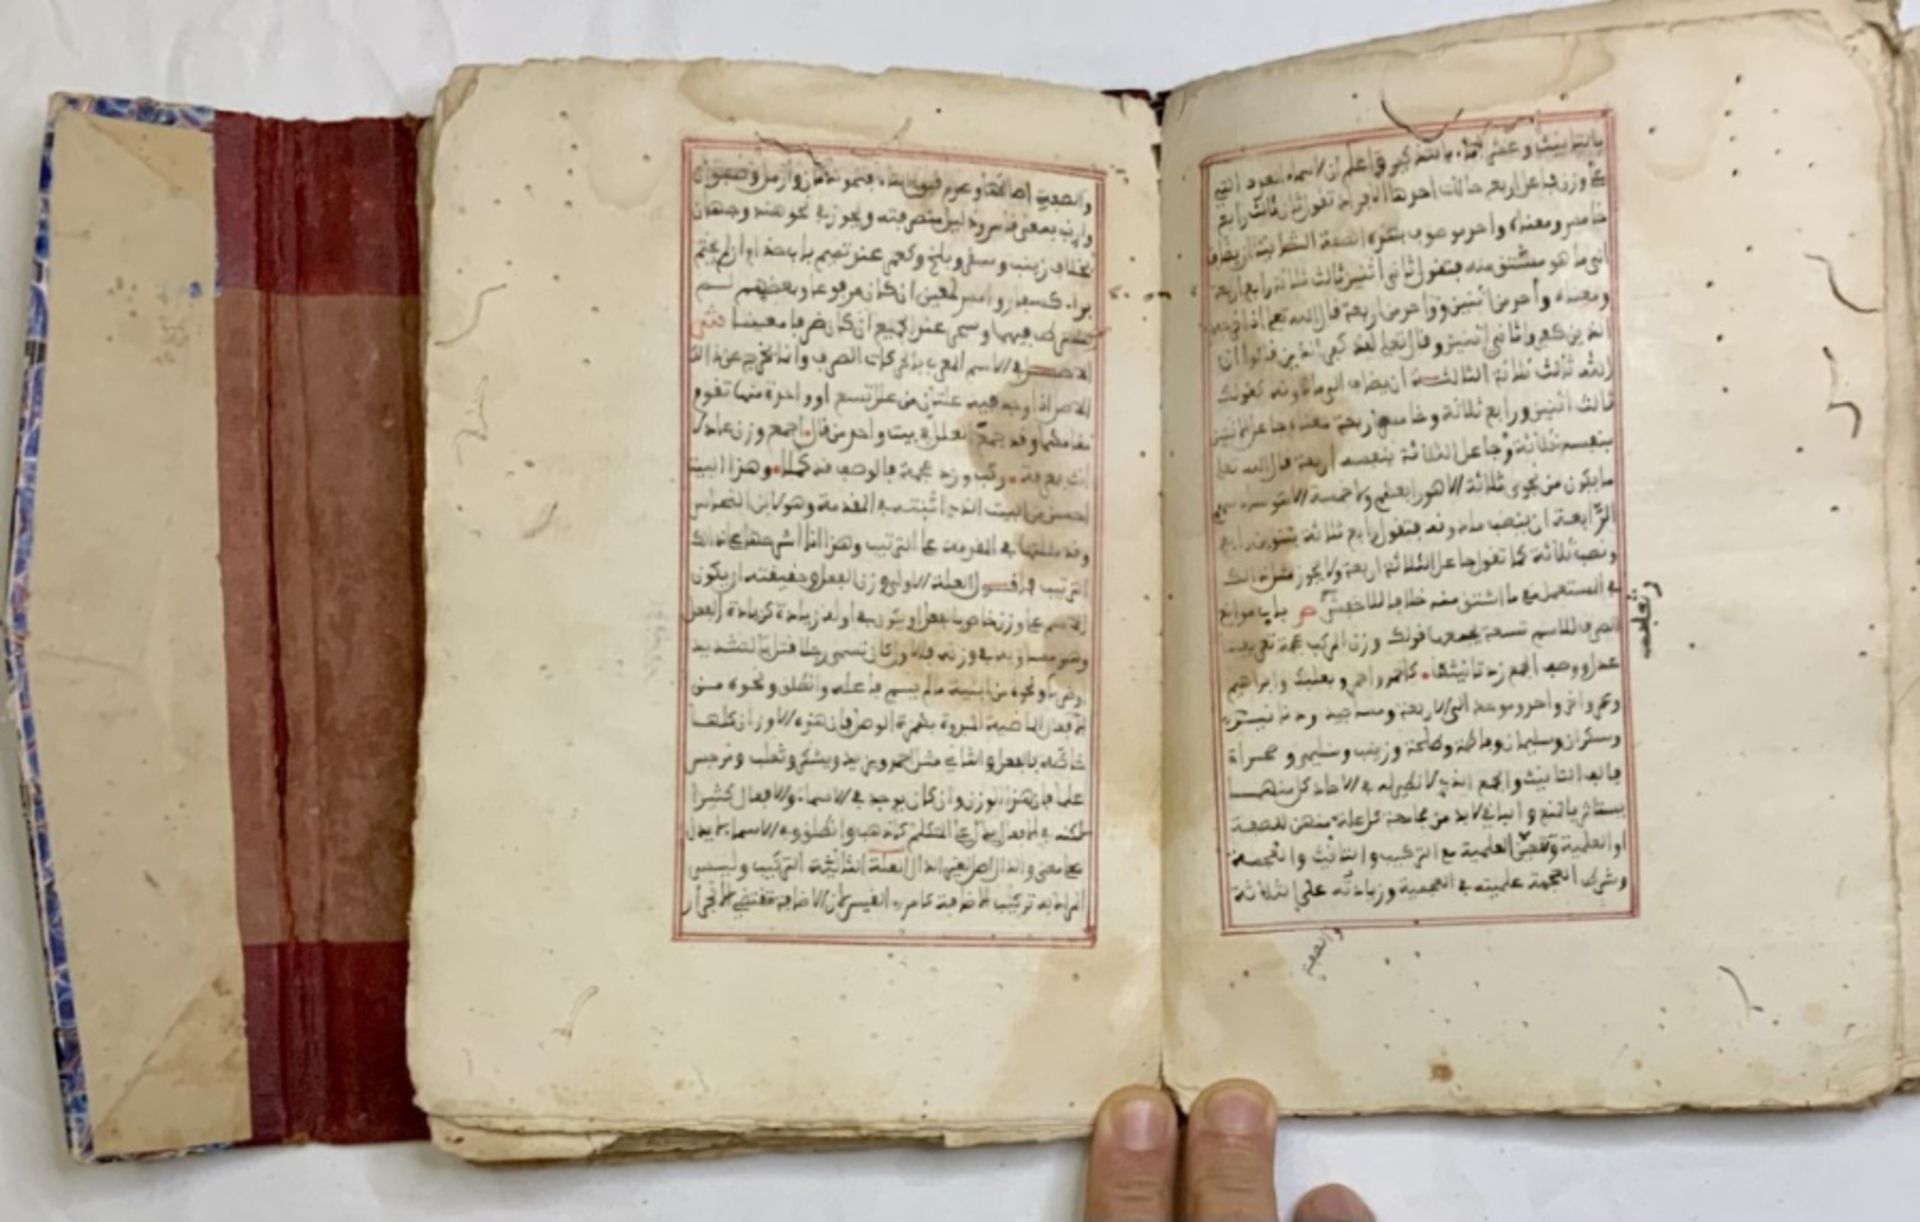 18th century Islamic manuscript on morphology and rhetoric - Image 8 of 18